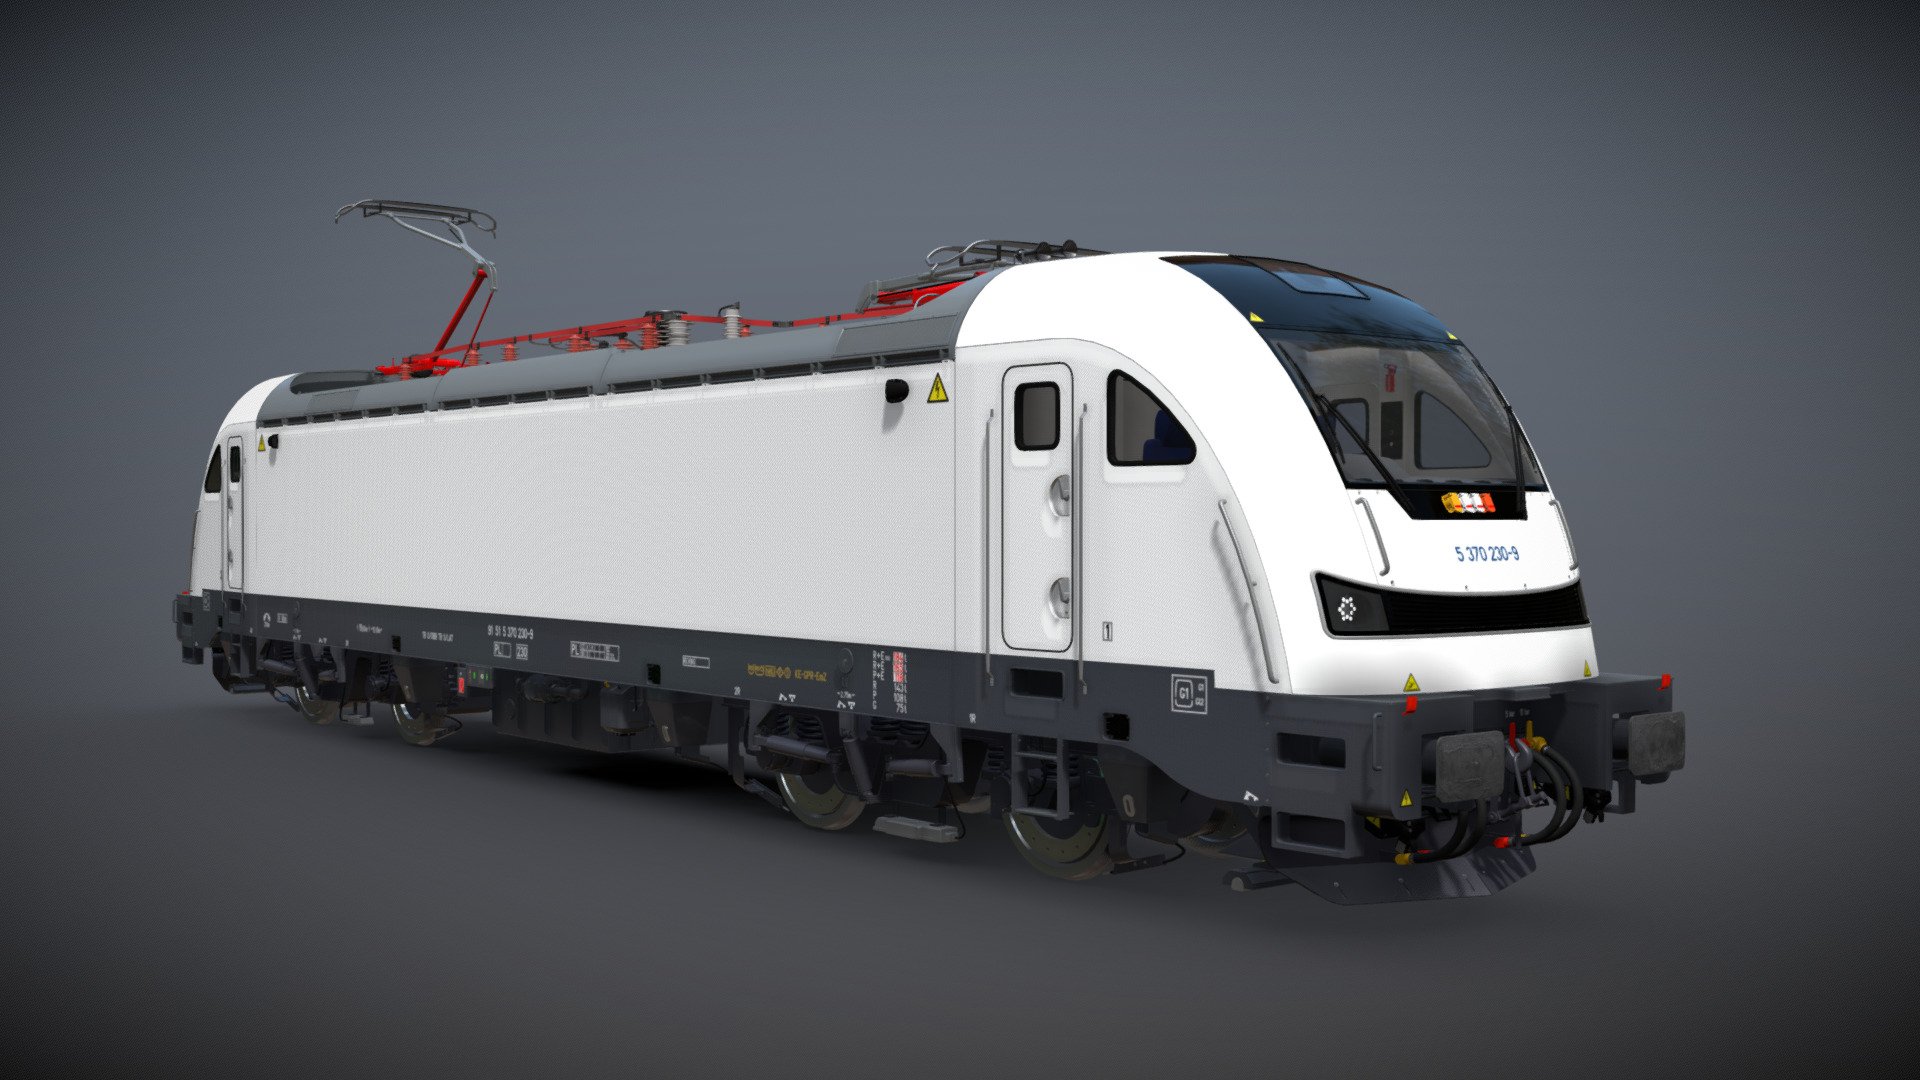 The model presents an original design of a modern 4-axle electric multi-system locomotive 3d model